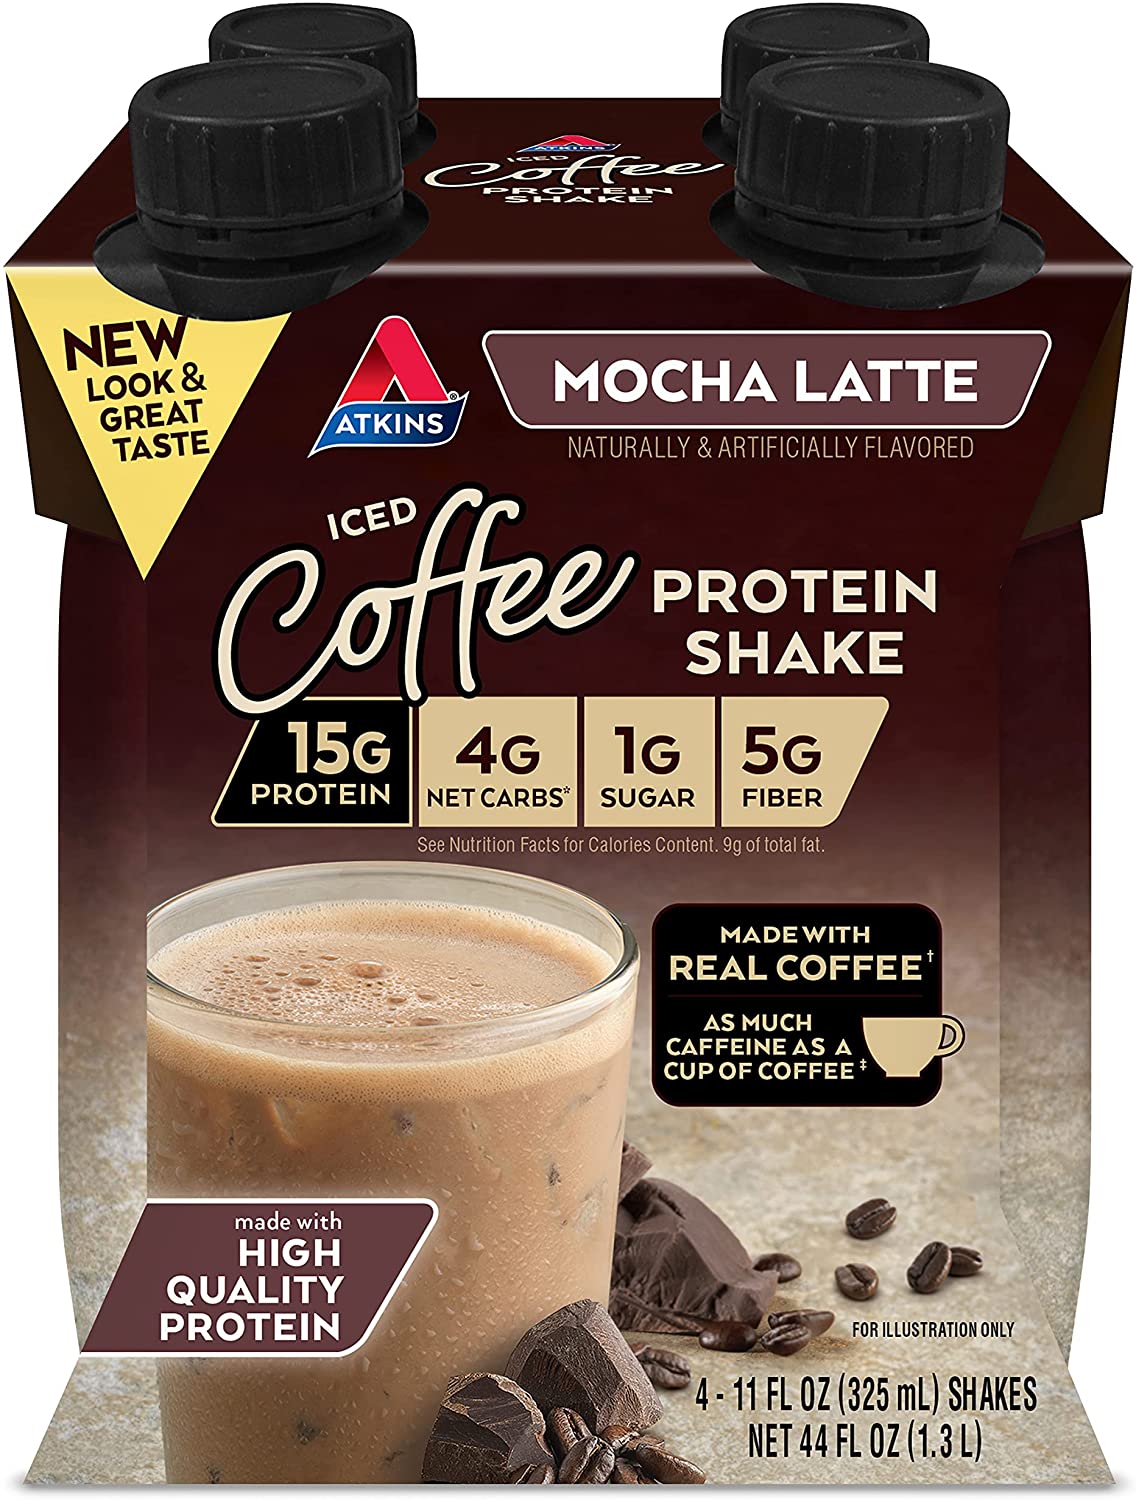 Atkins Mocha Latte Protein-Rich Shake (4 Shakes) $5.98